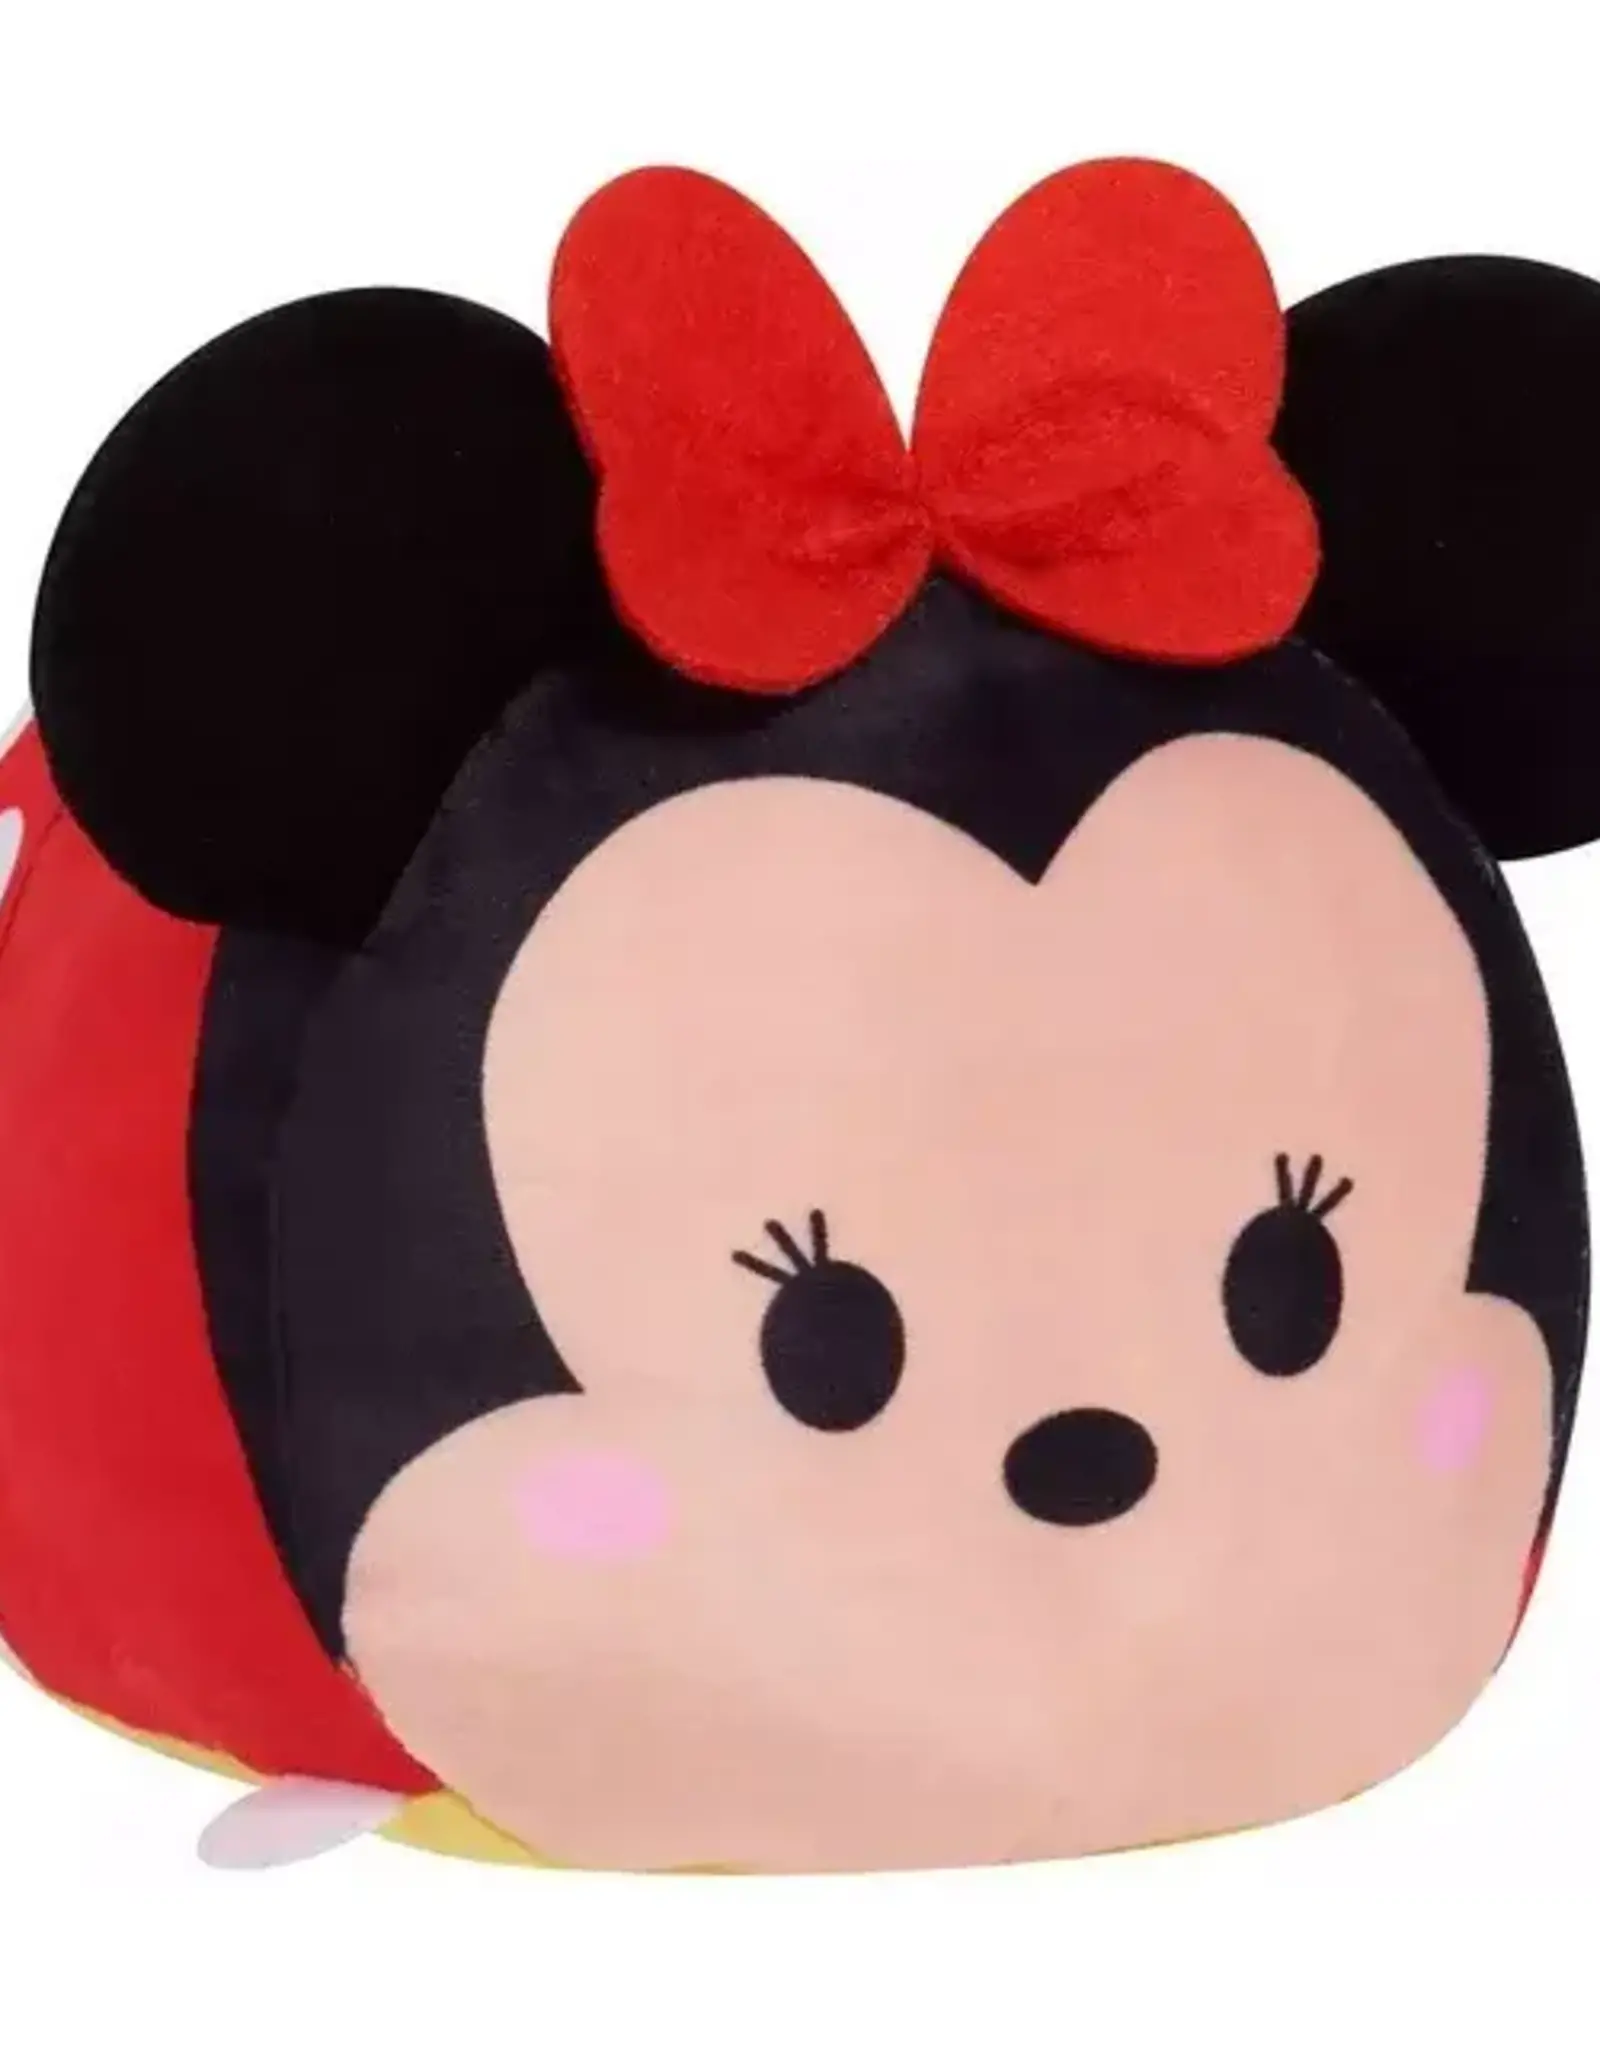 Disney Tsum Tsum Minnie Mouse 7in Plush